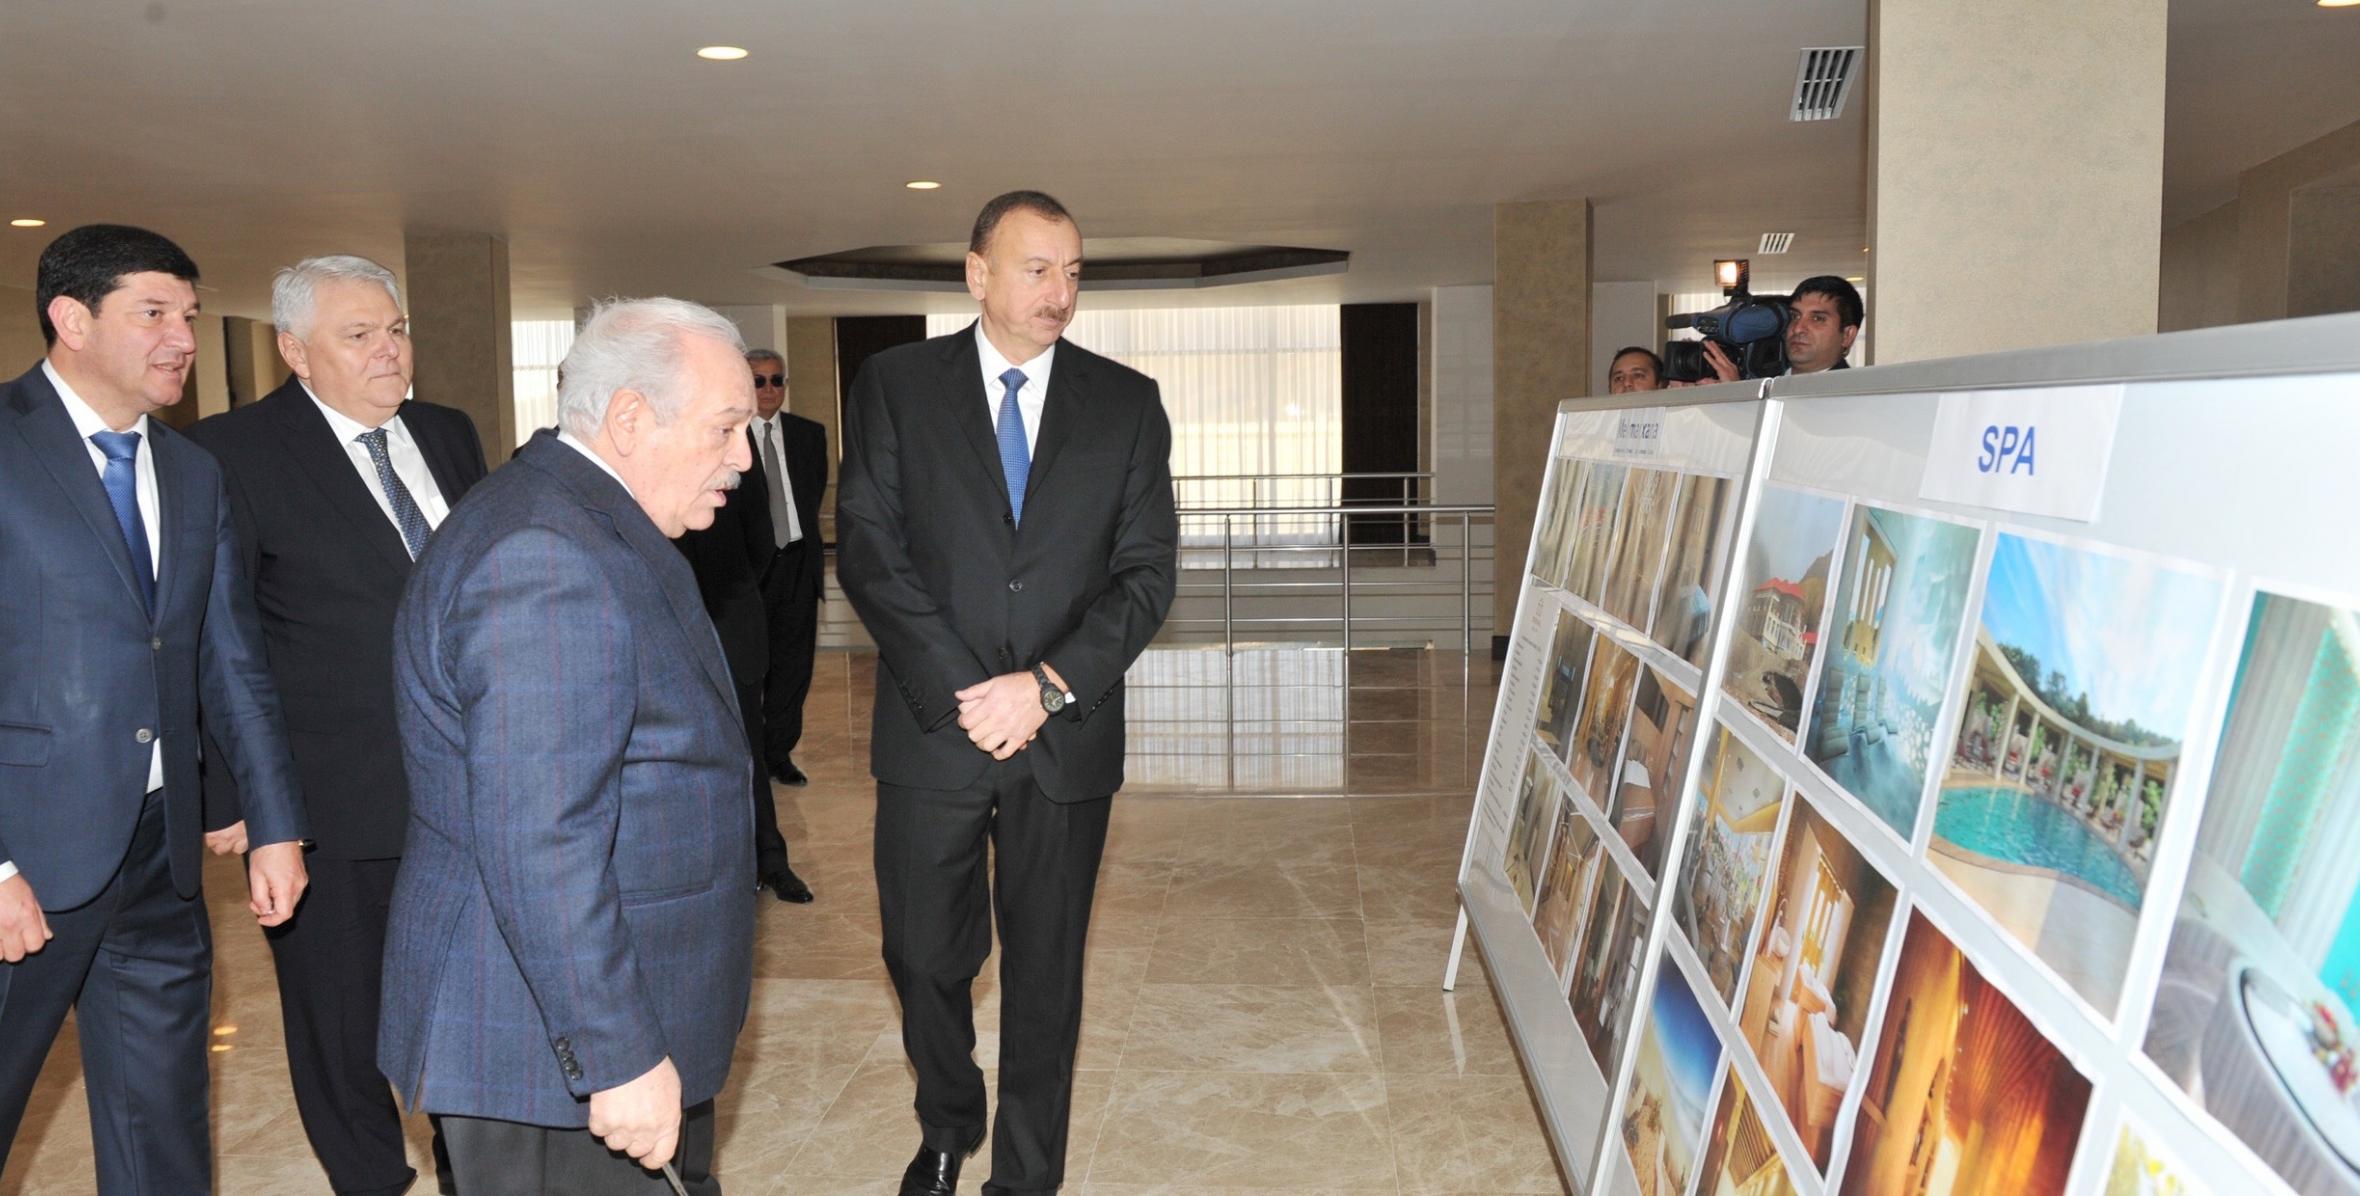 Ilham Aliyev reviewed the construction progress at “Markhal” sanatorium and resort in Shaki